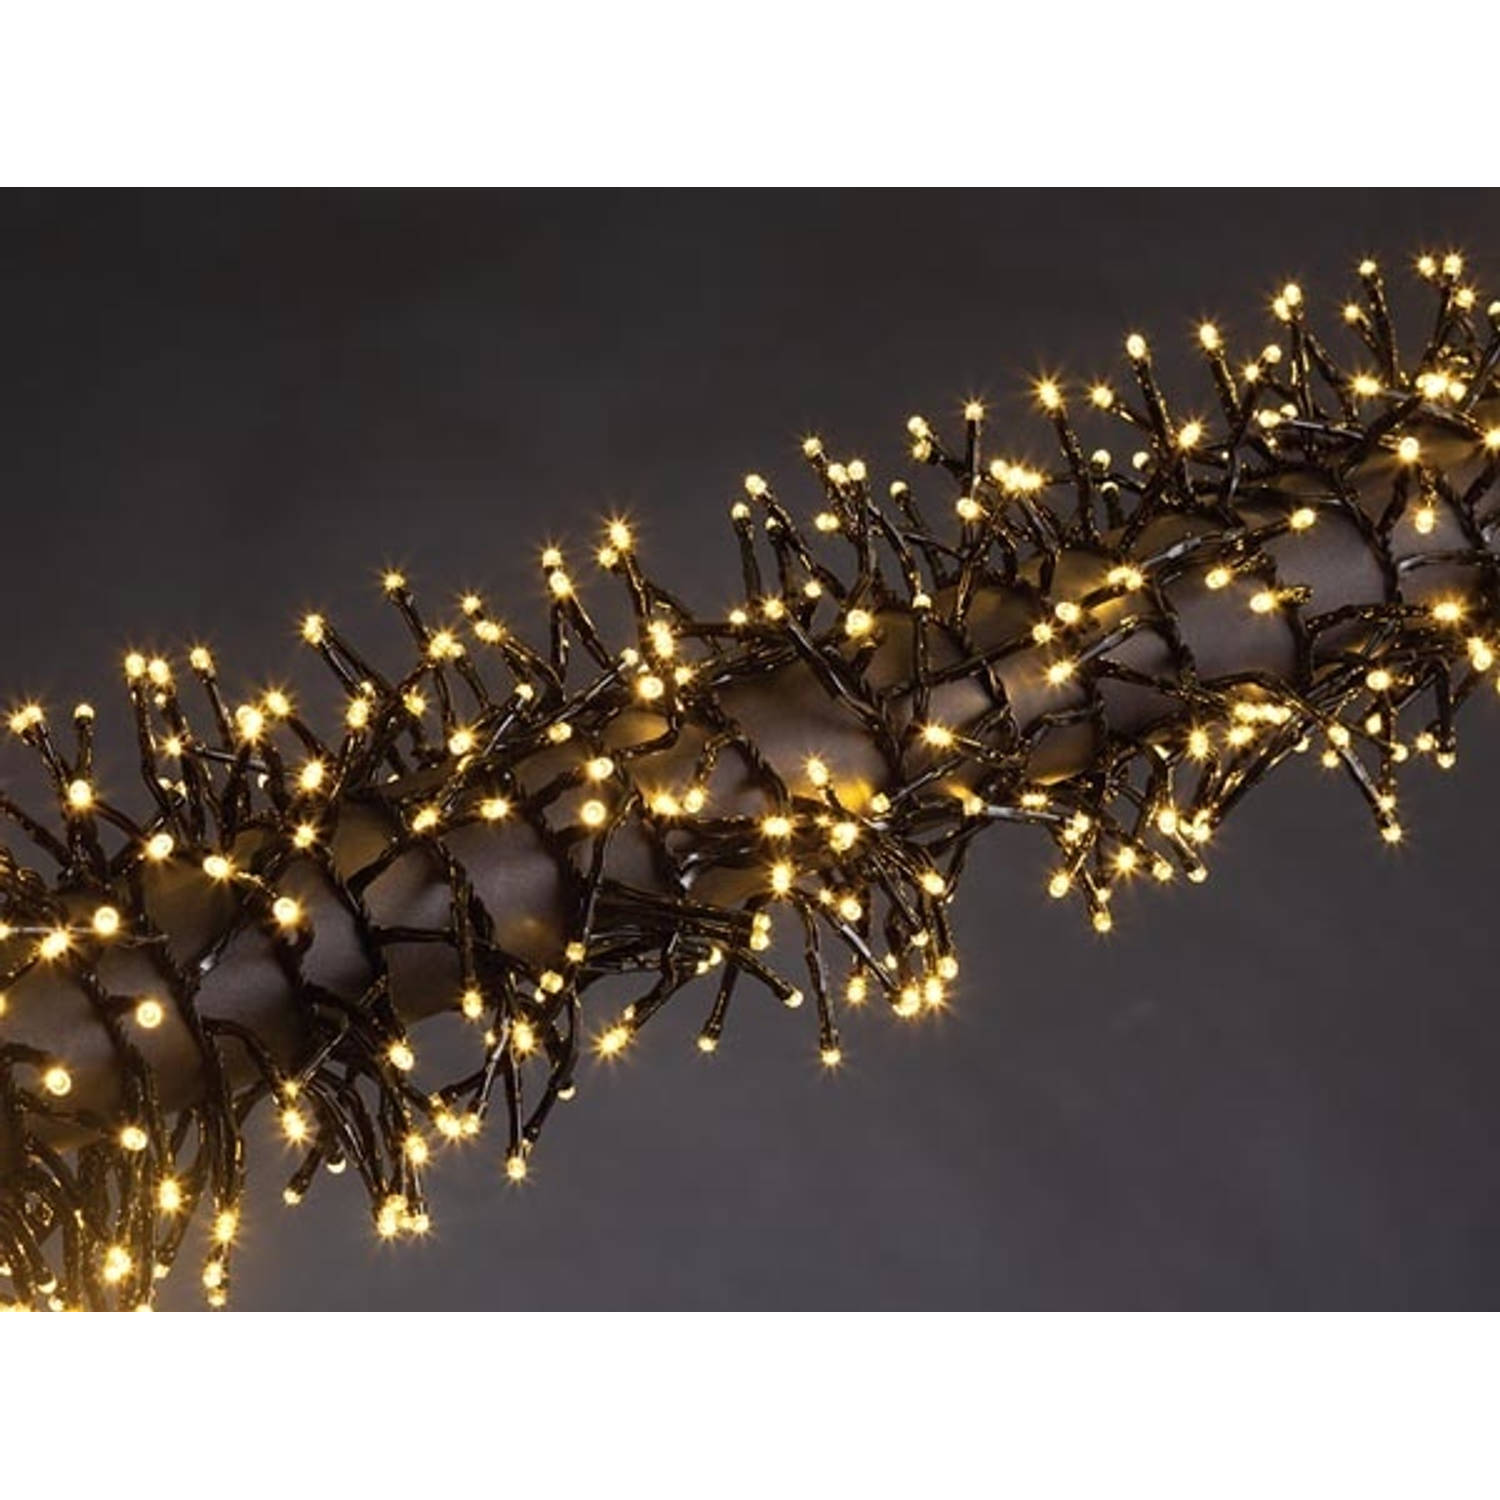 Vellight Kerstverlichting - 12m - 1020 LED's - Warm Wit - Binnen & Buiten